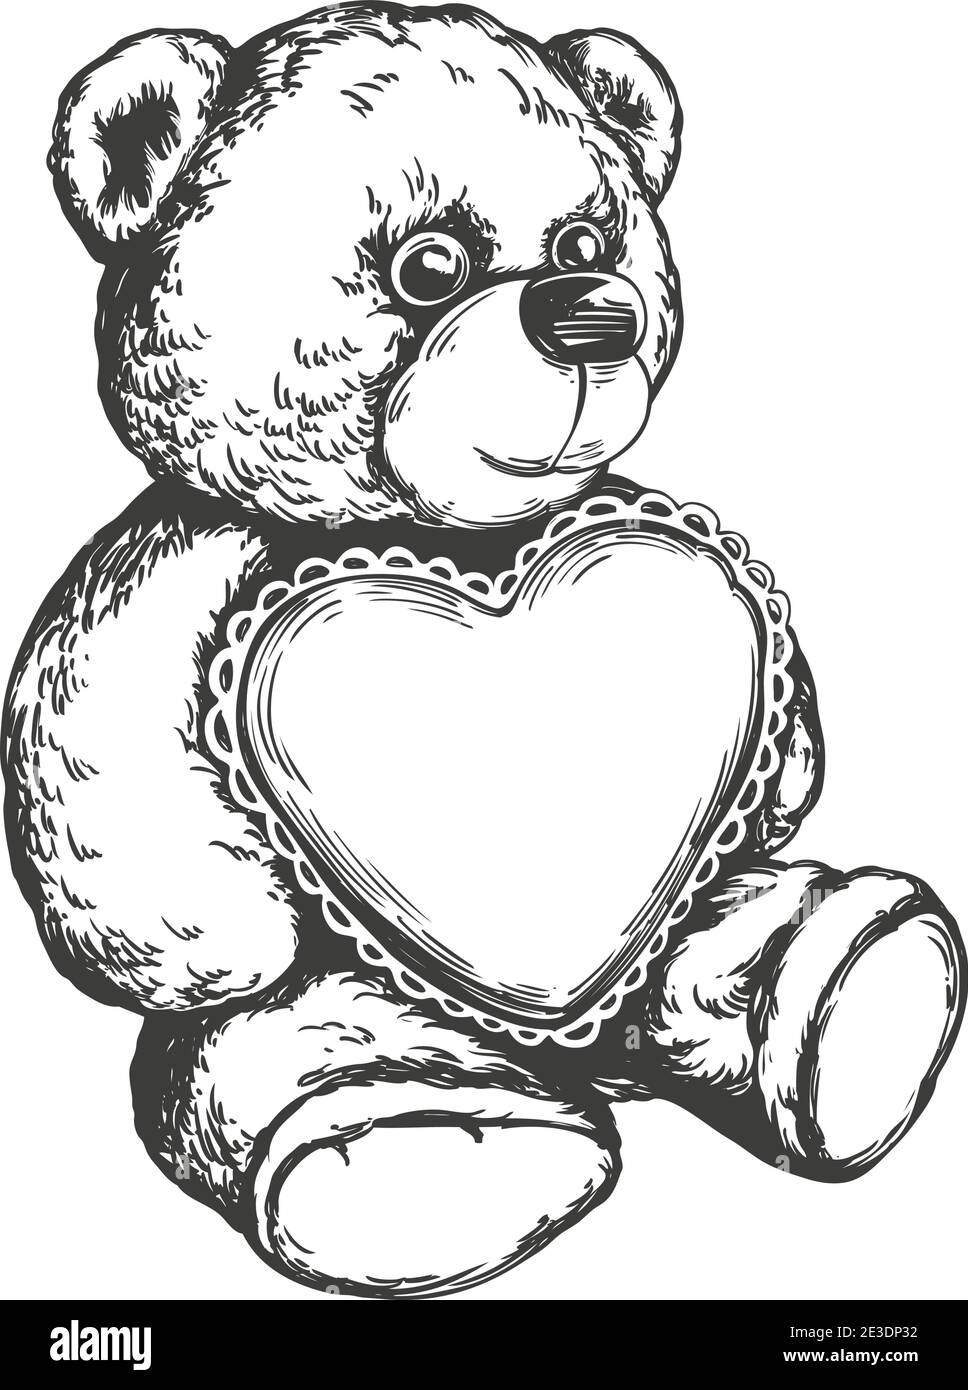 Teddy bear - Art Starts